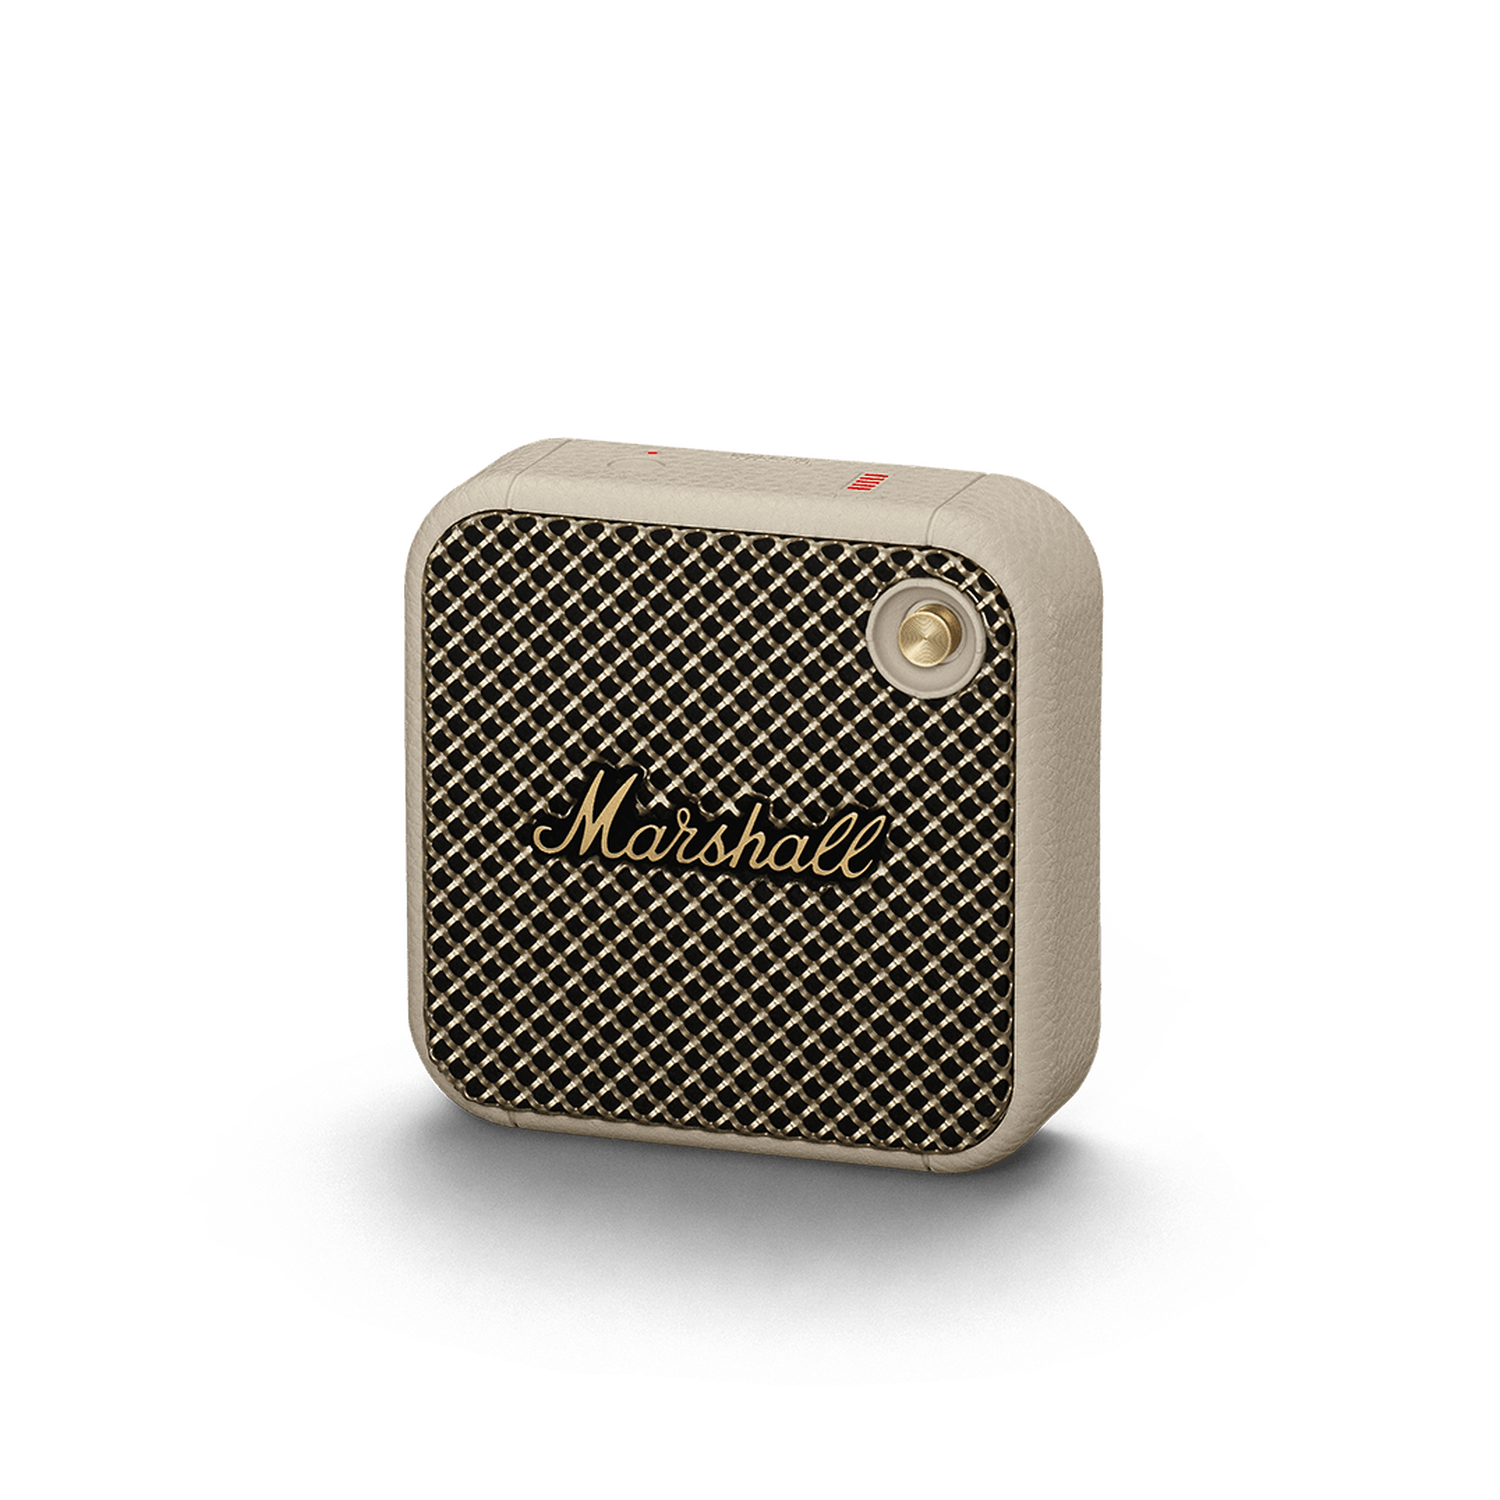 Marshall Willen Portable Bluetooth Speaker in Cream and Brass (main)